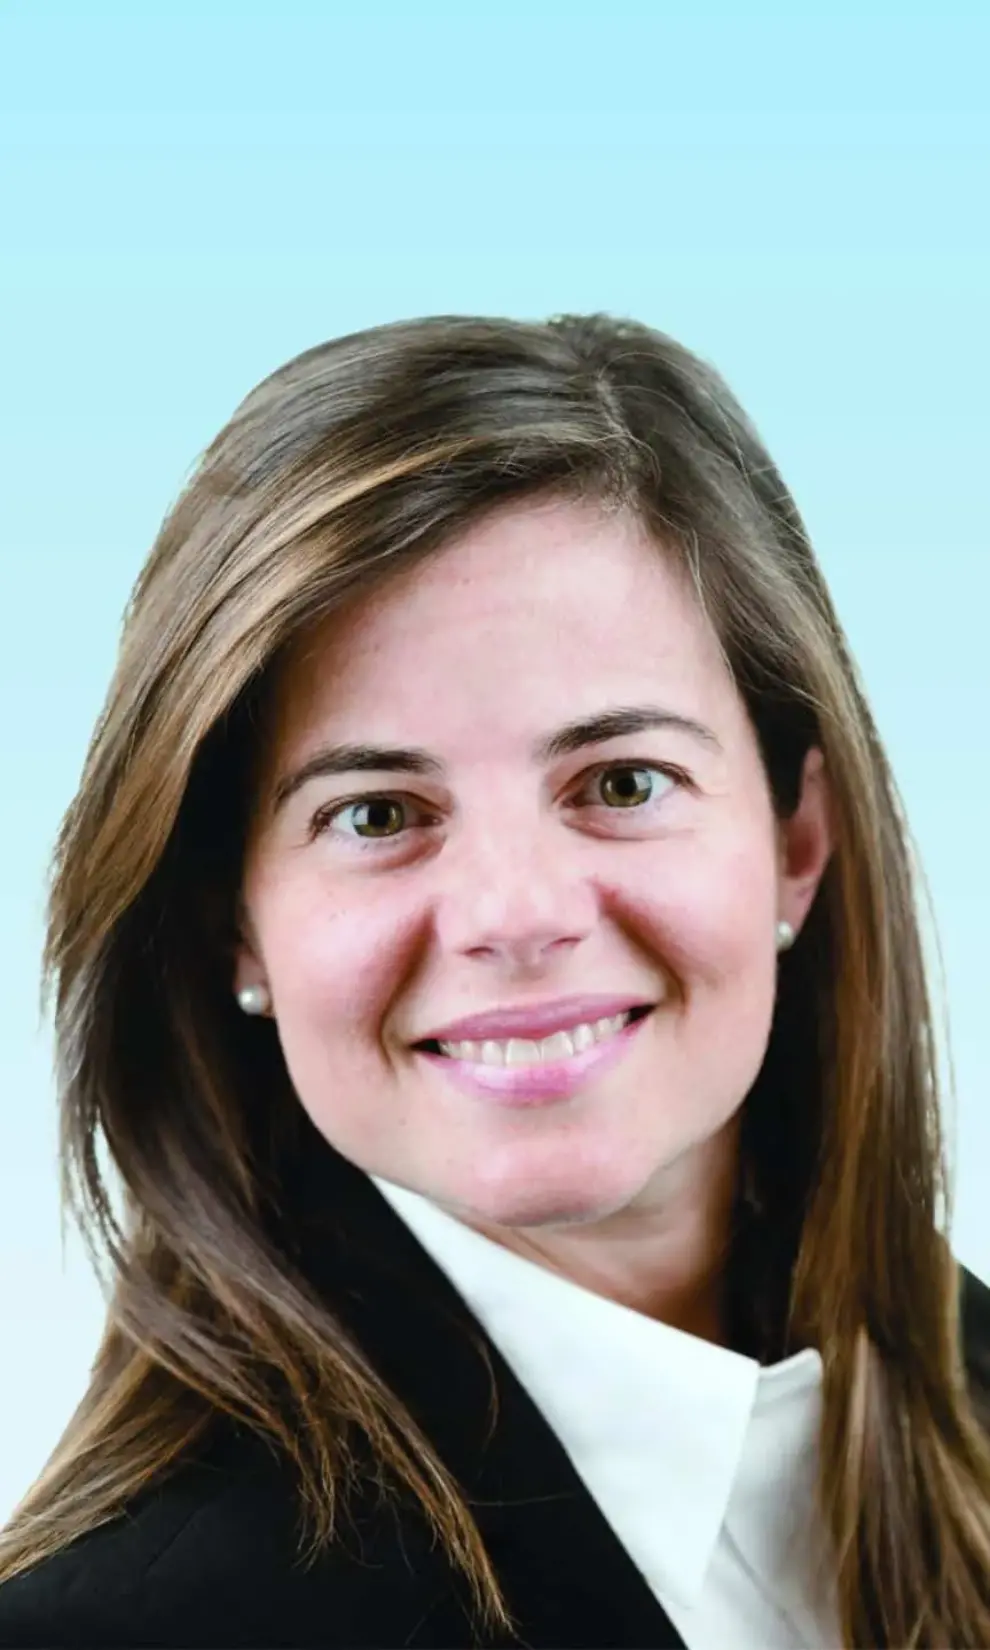 Sofia Berger to Lead U.S. Transportation Business at WSP USA